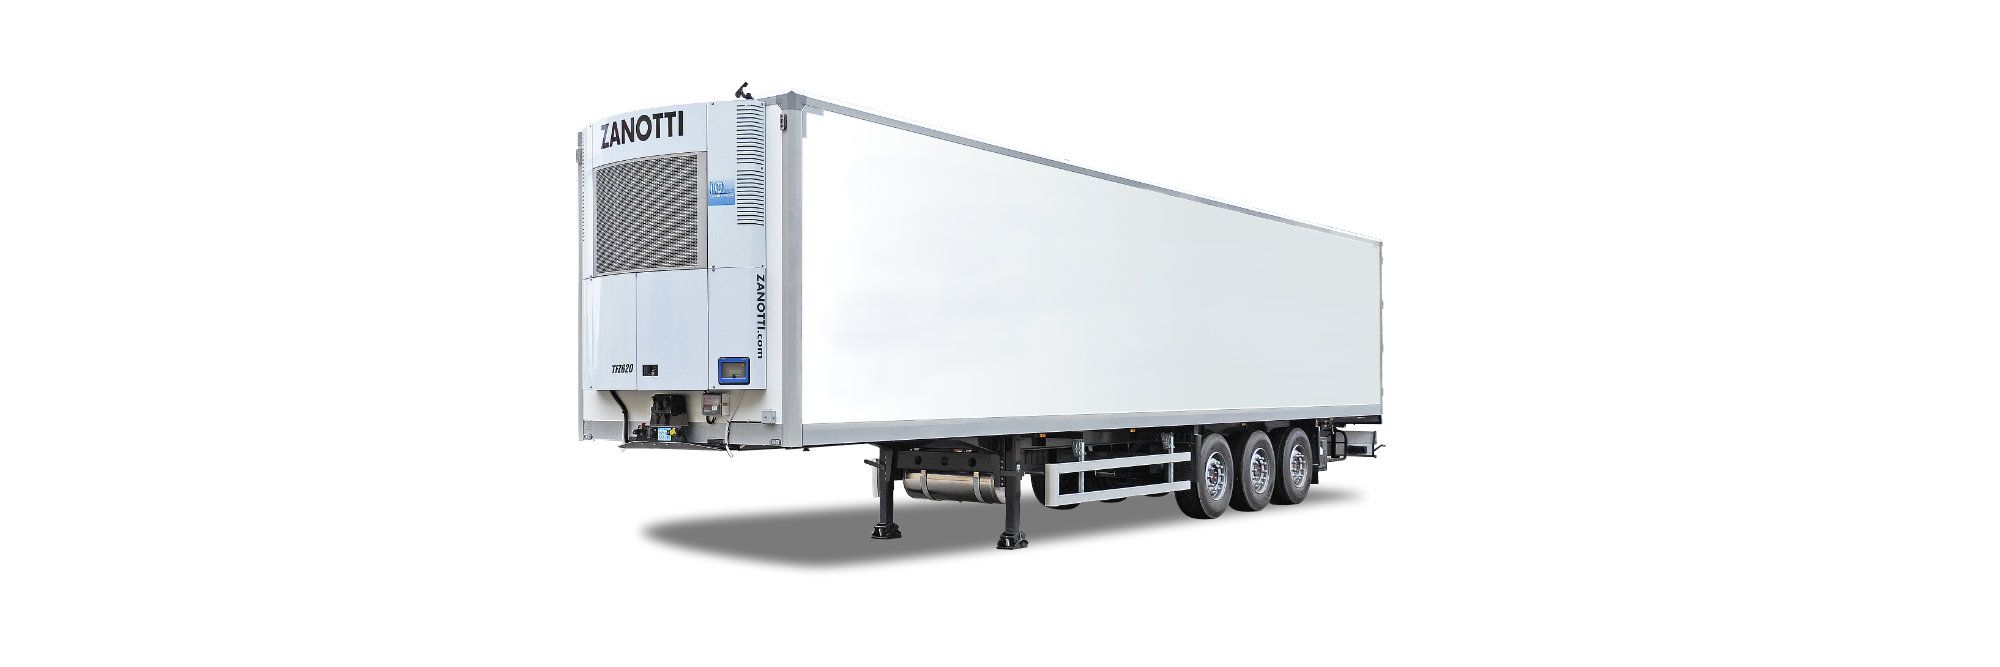 Decopan Commercial Vehicle FRP GRP laminates refrigerated, frozen semi-railer, truck, van body